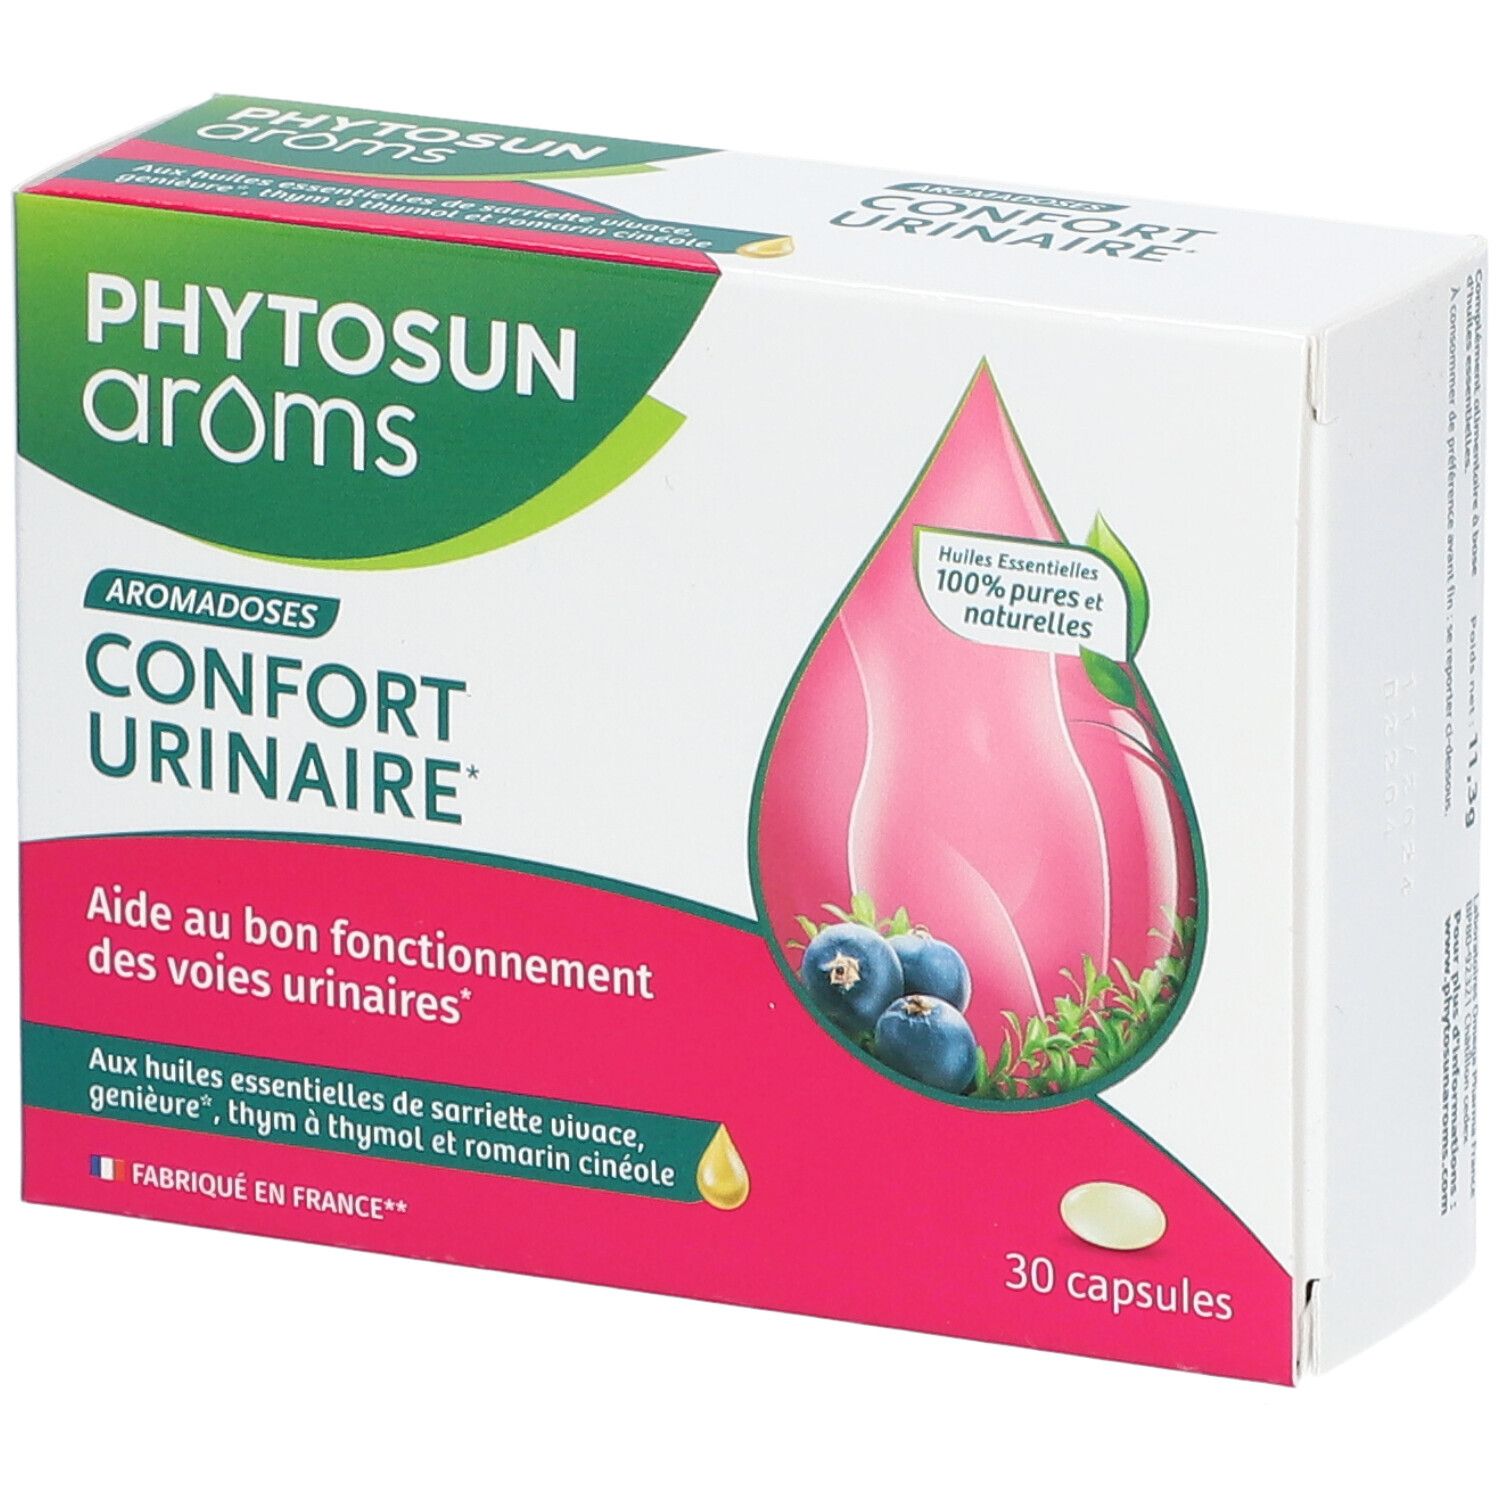 OMEGA PHARMA FRANCE Phytosun Aroms aromadoses confort urinaire